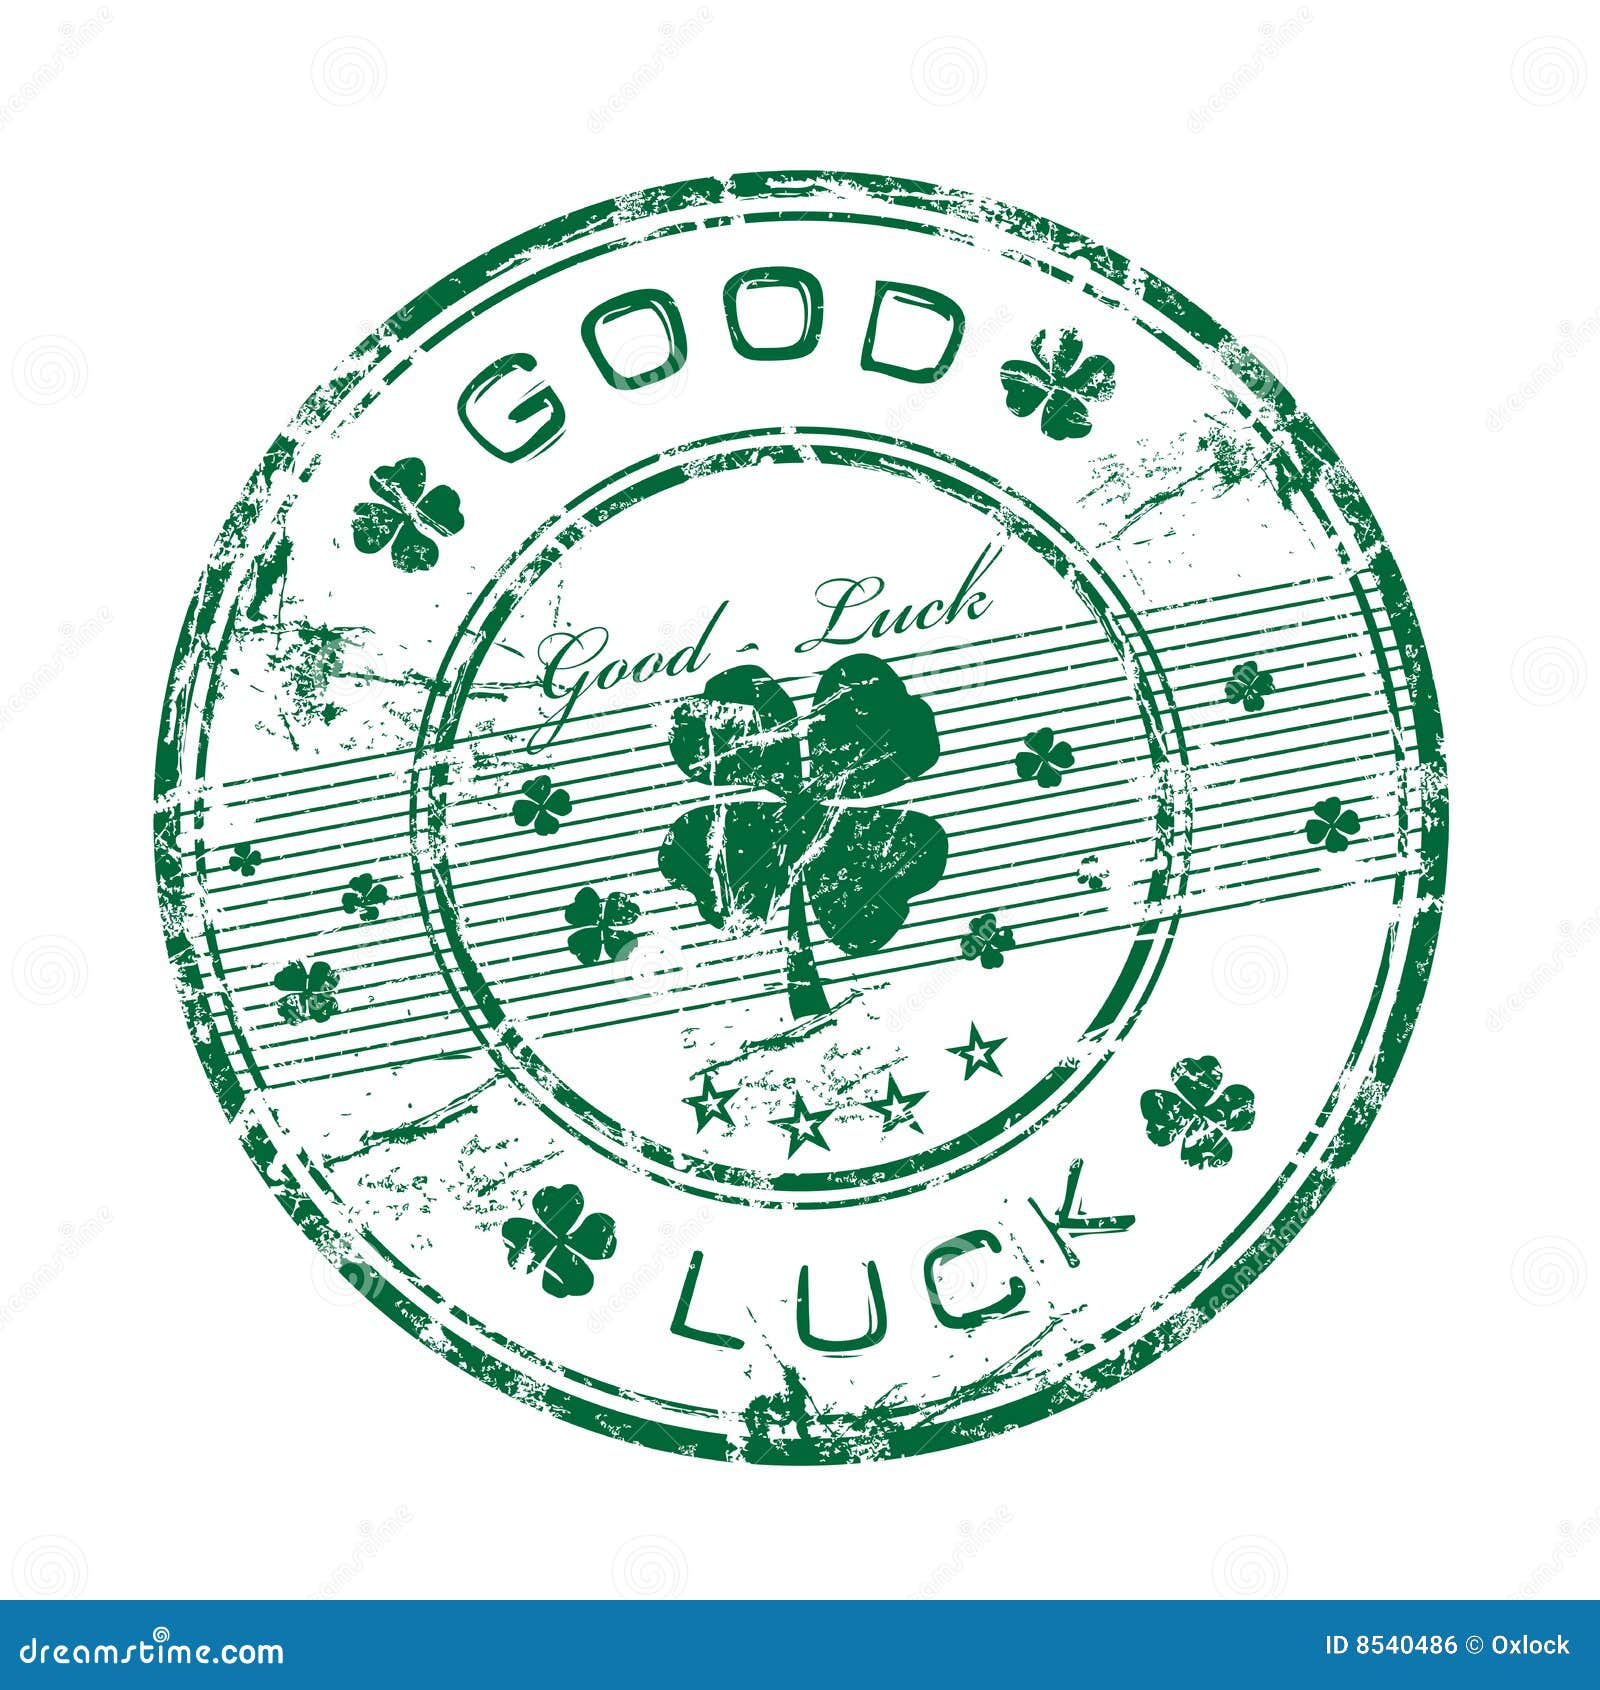 free clipart good luck symbols - photo #41